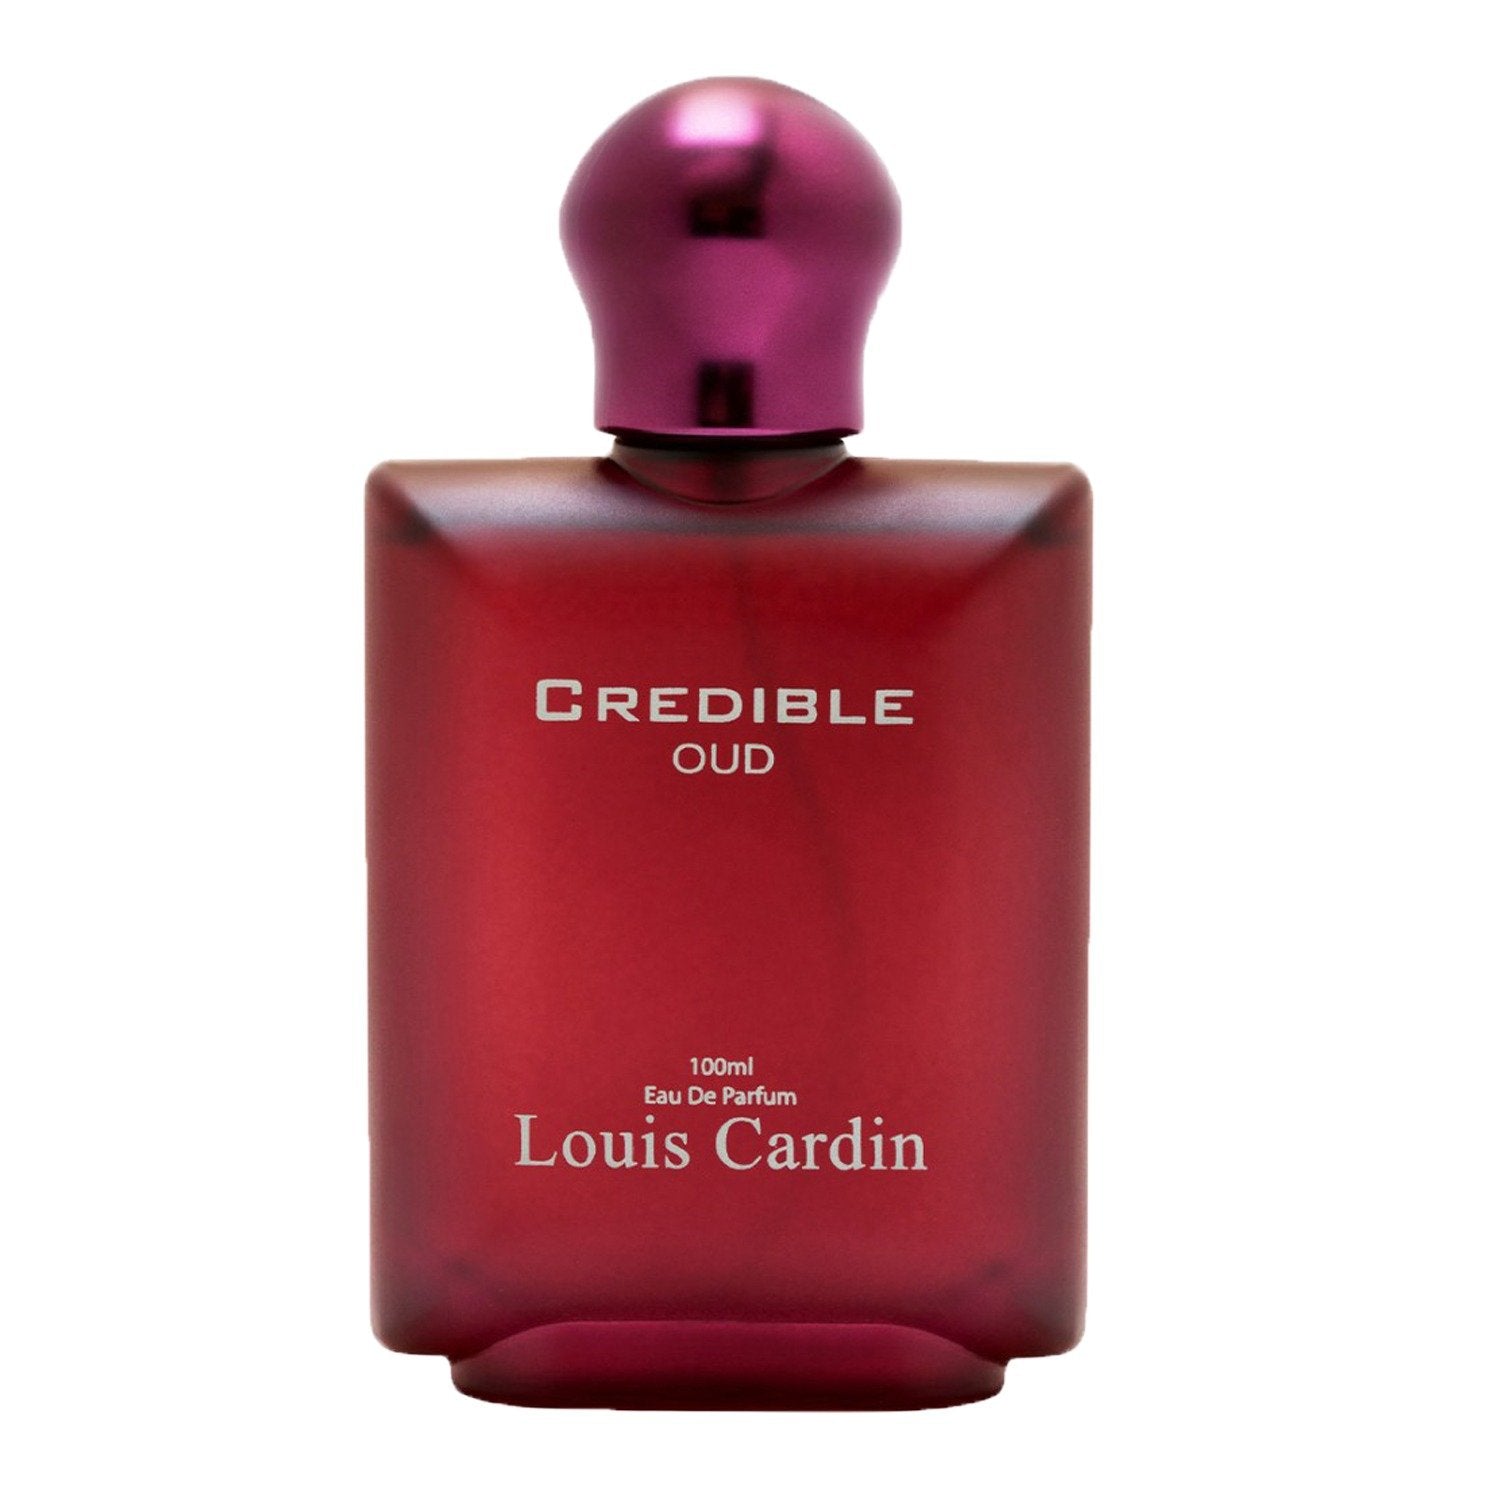 Louis Cardin Credible Oud For Men and Women - Arabic Perfume